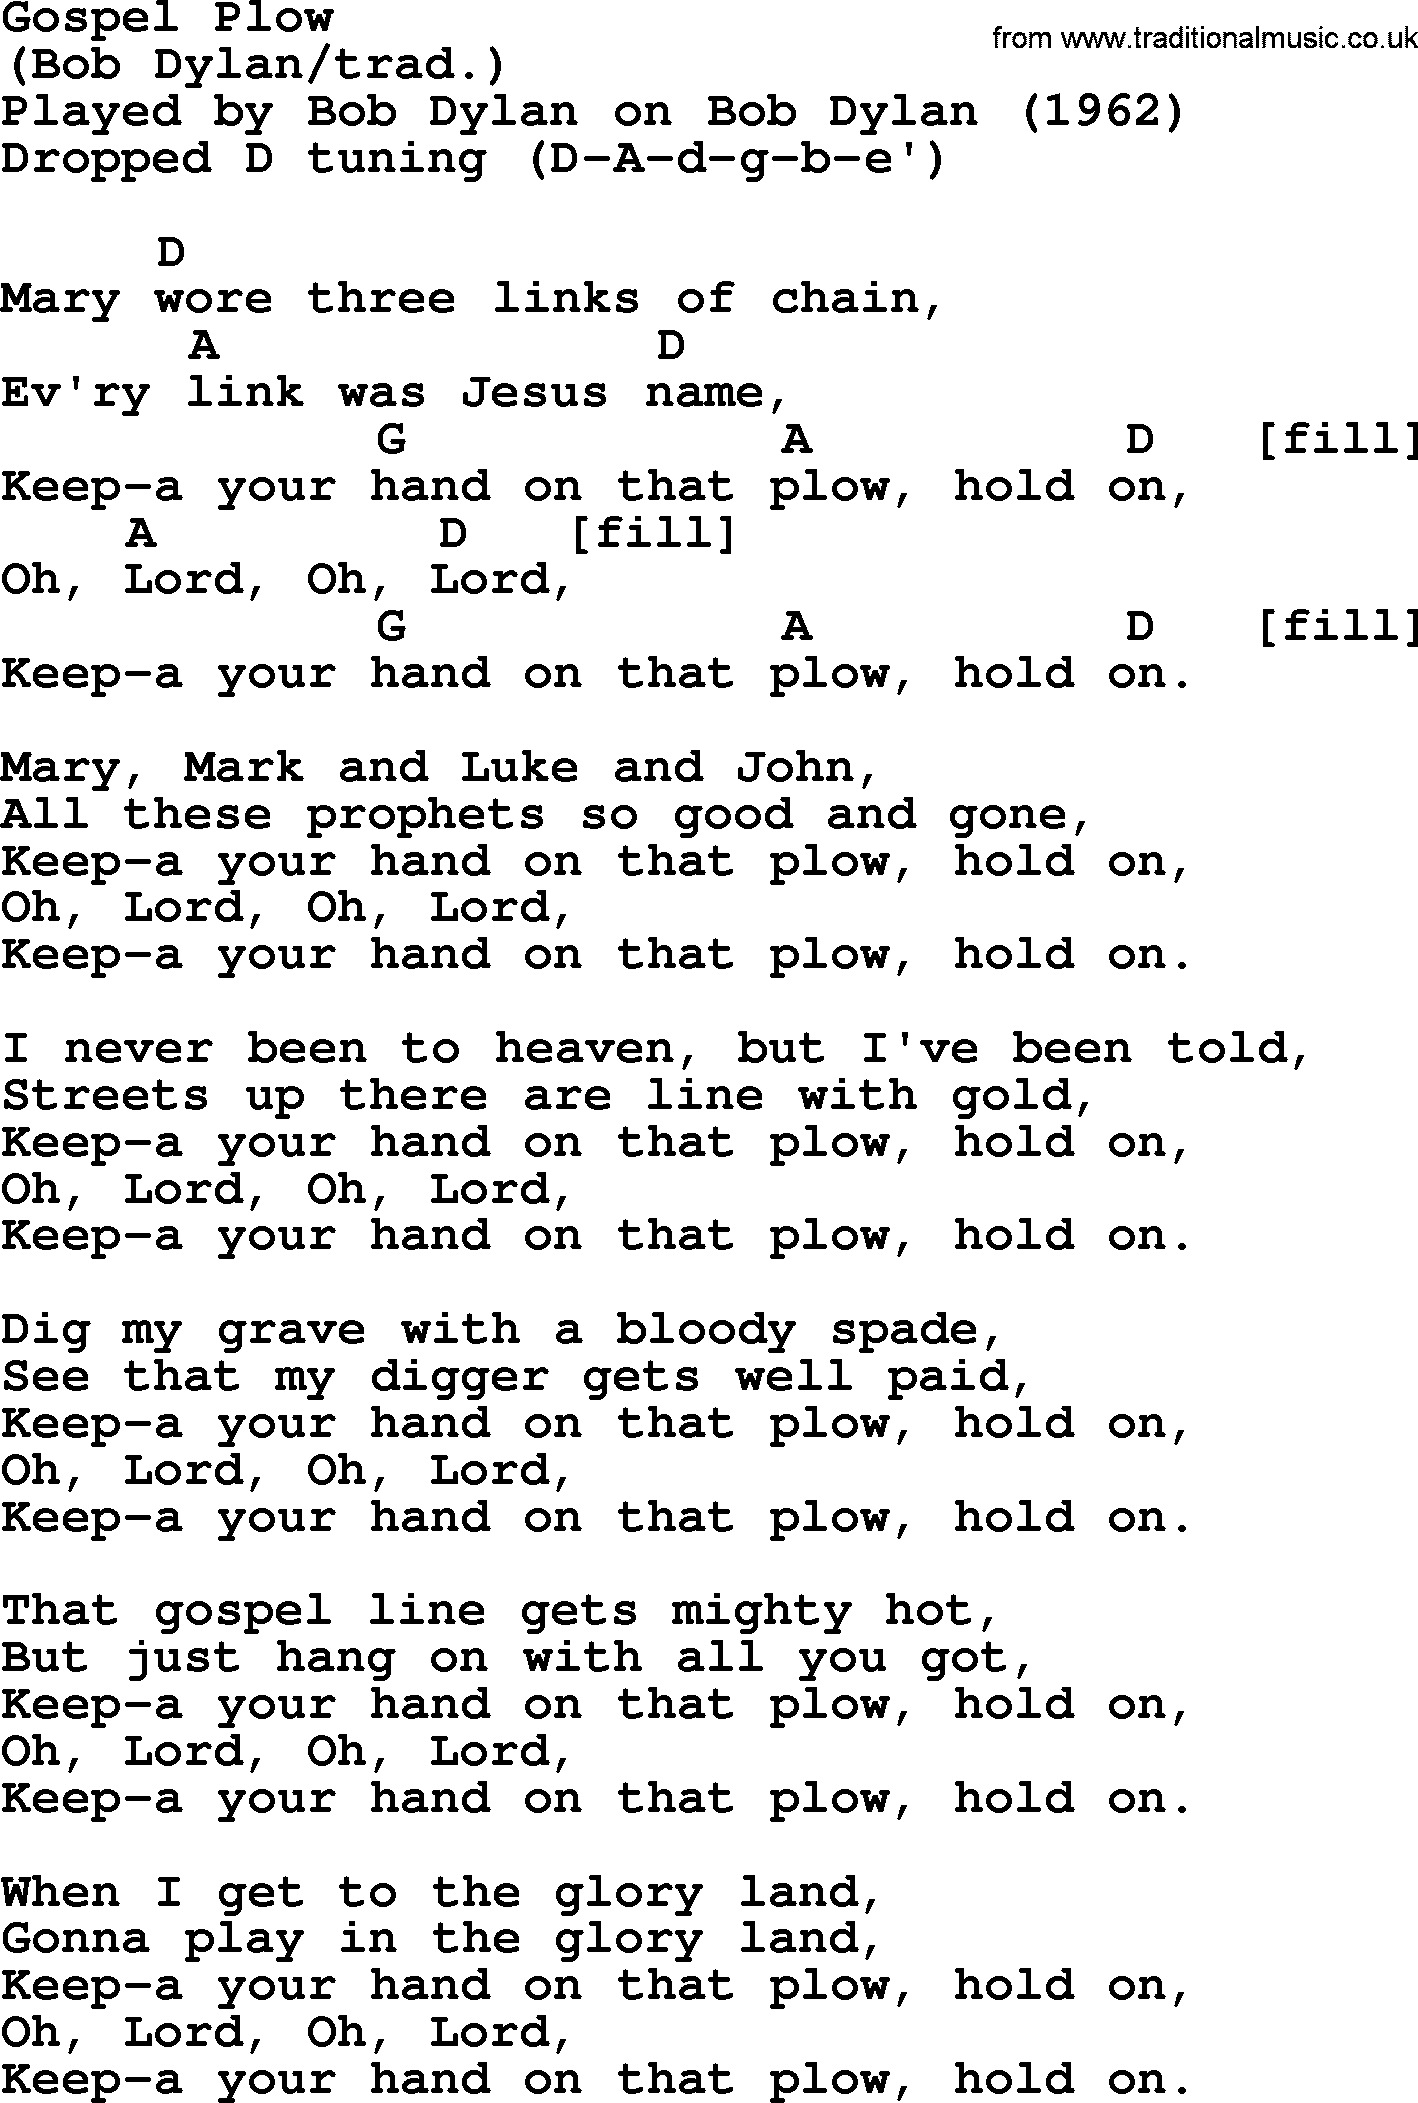 Bob Dylan song, lyrics with chords - Gospel Plow